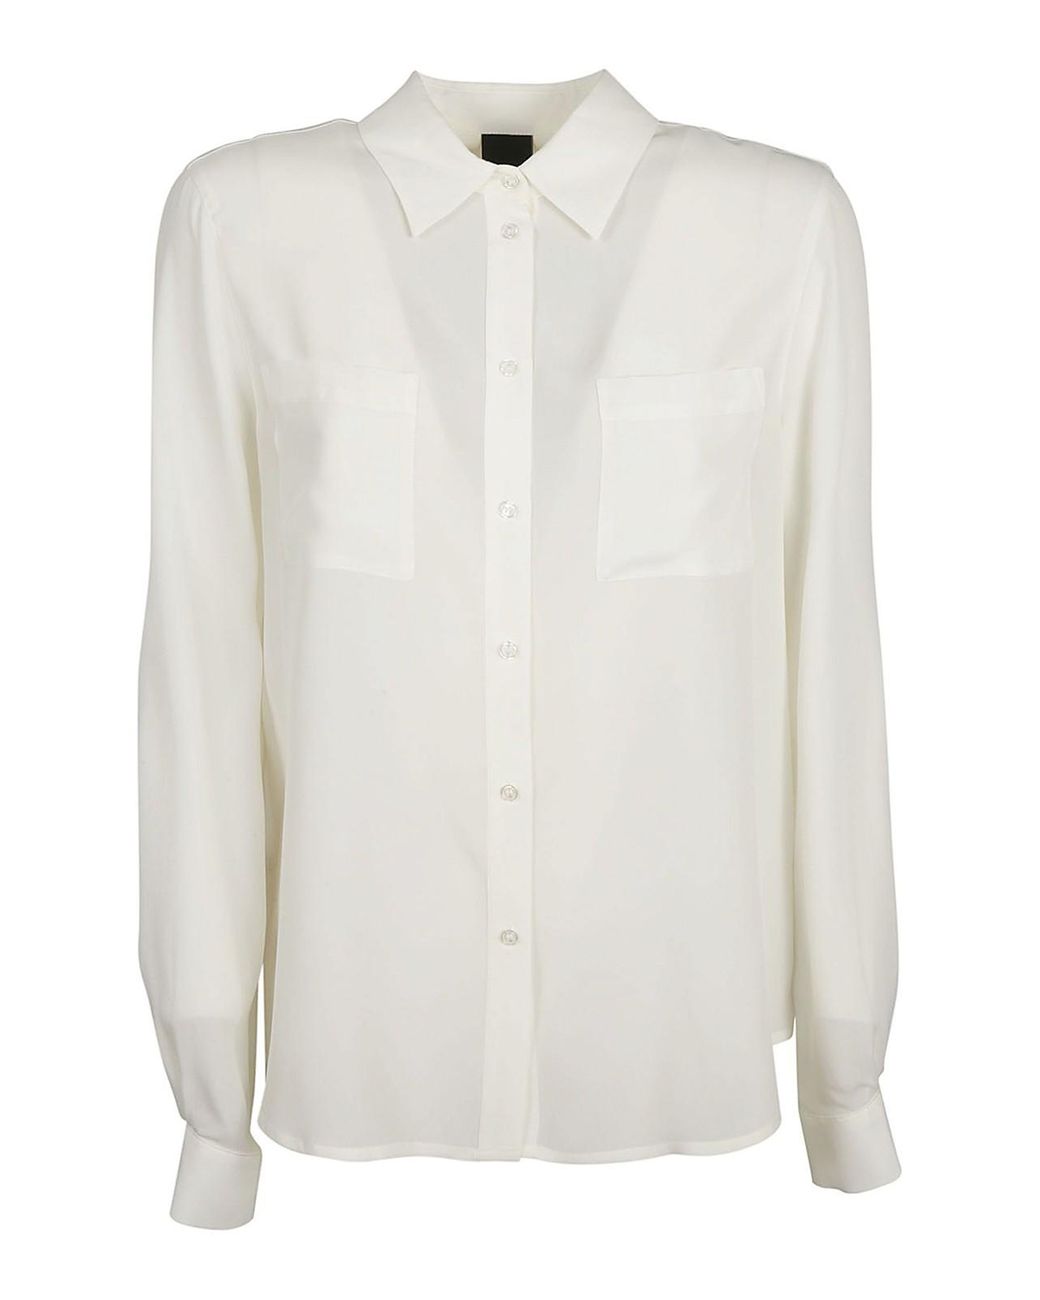 Pinko Silk Nora Shirt in White - Lyst